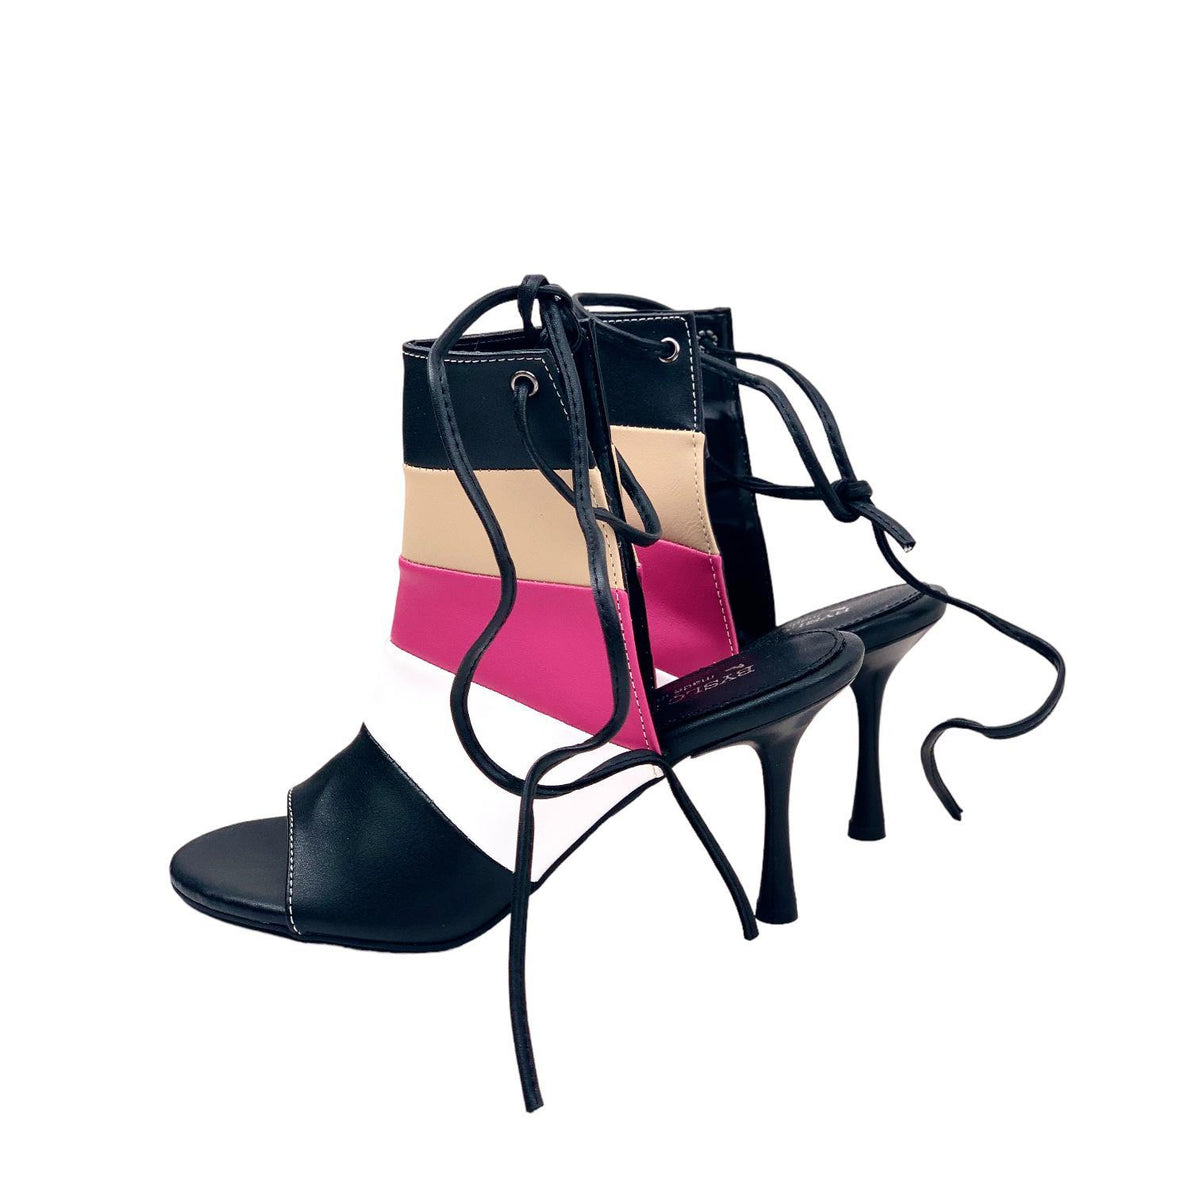 Women's Gebb Black Thin Heeled Closed Shoes 8 Cm 106 - STREETMODE™